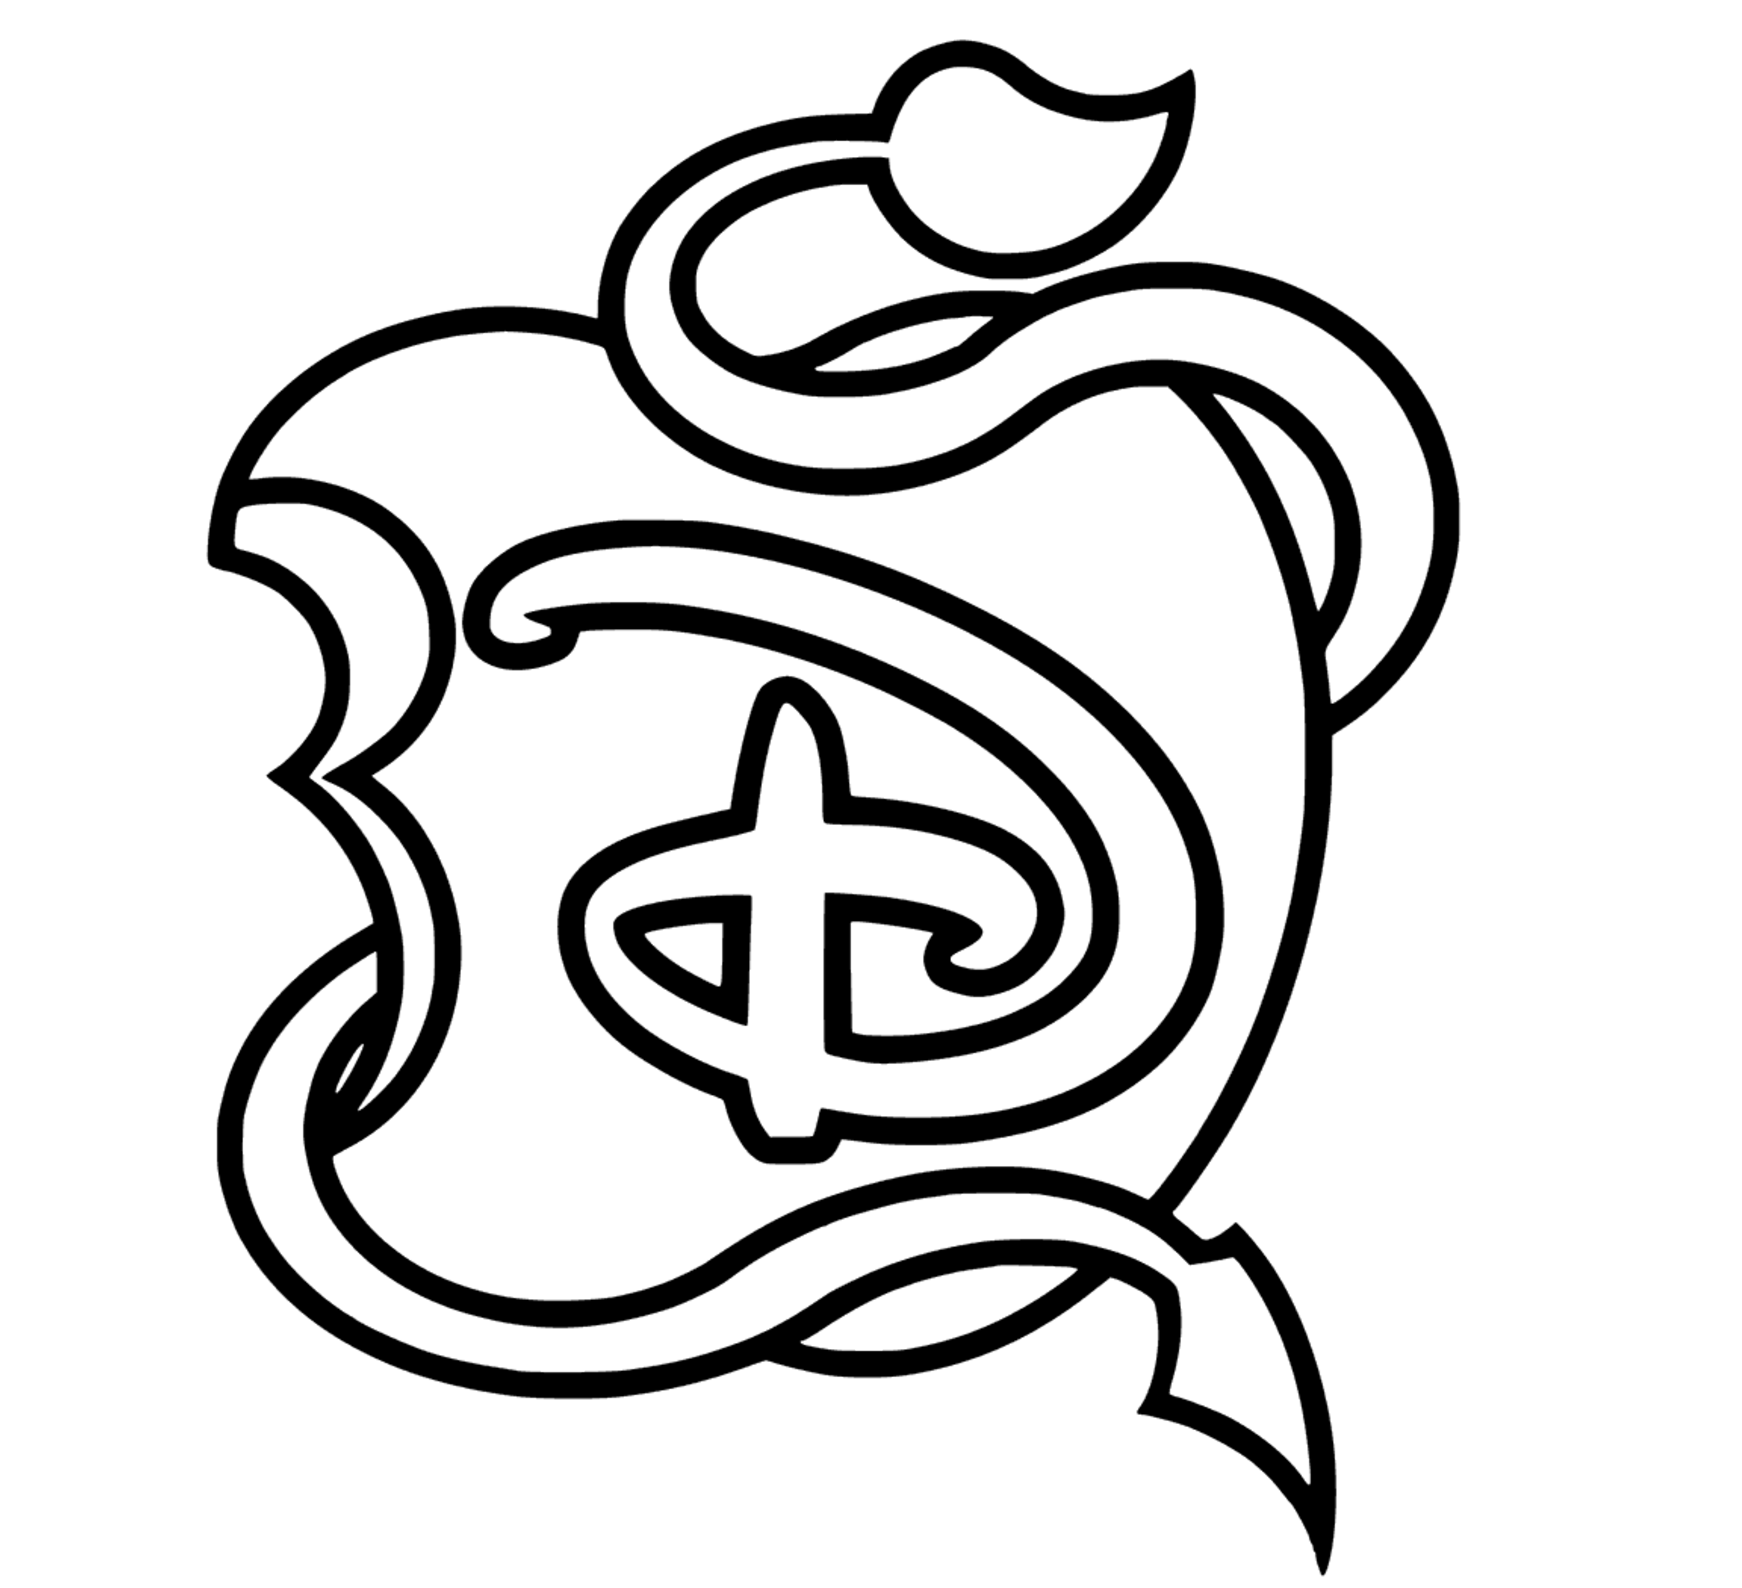 The descendants disney mini logo